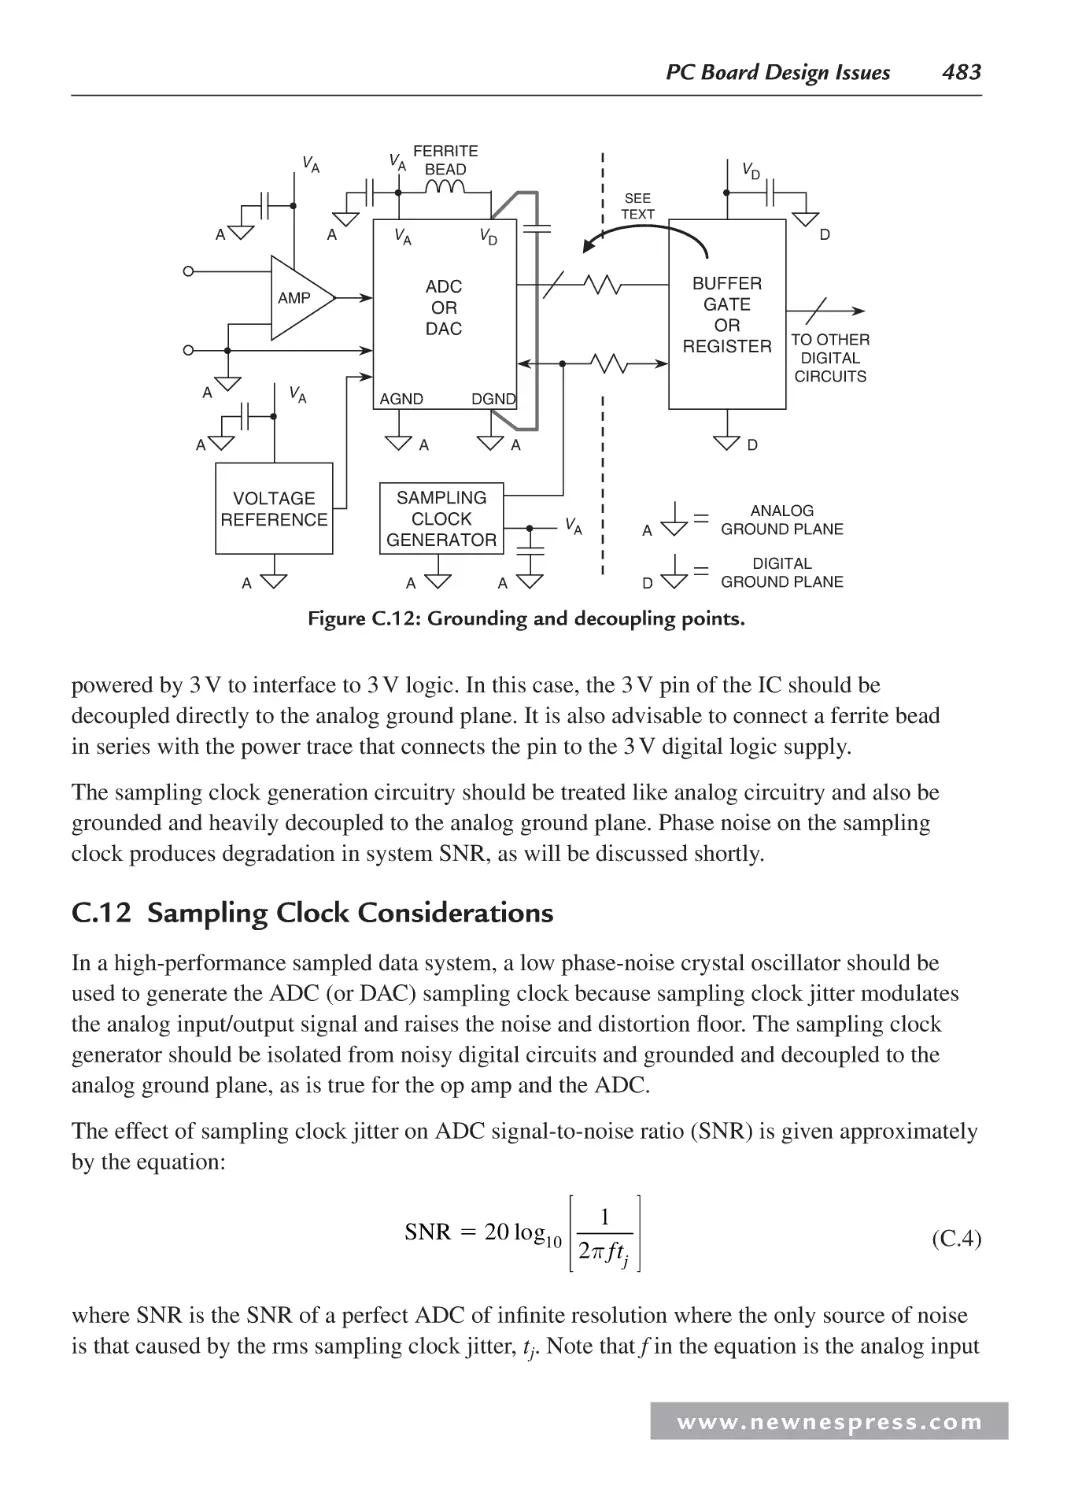 C.12 Sampling Clock Considerations